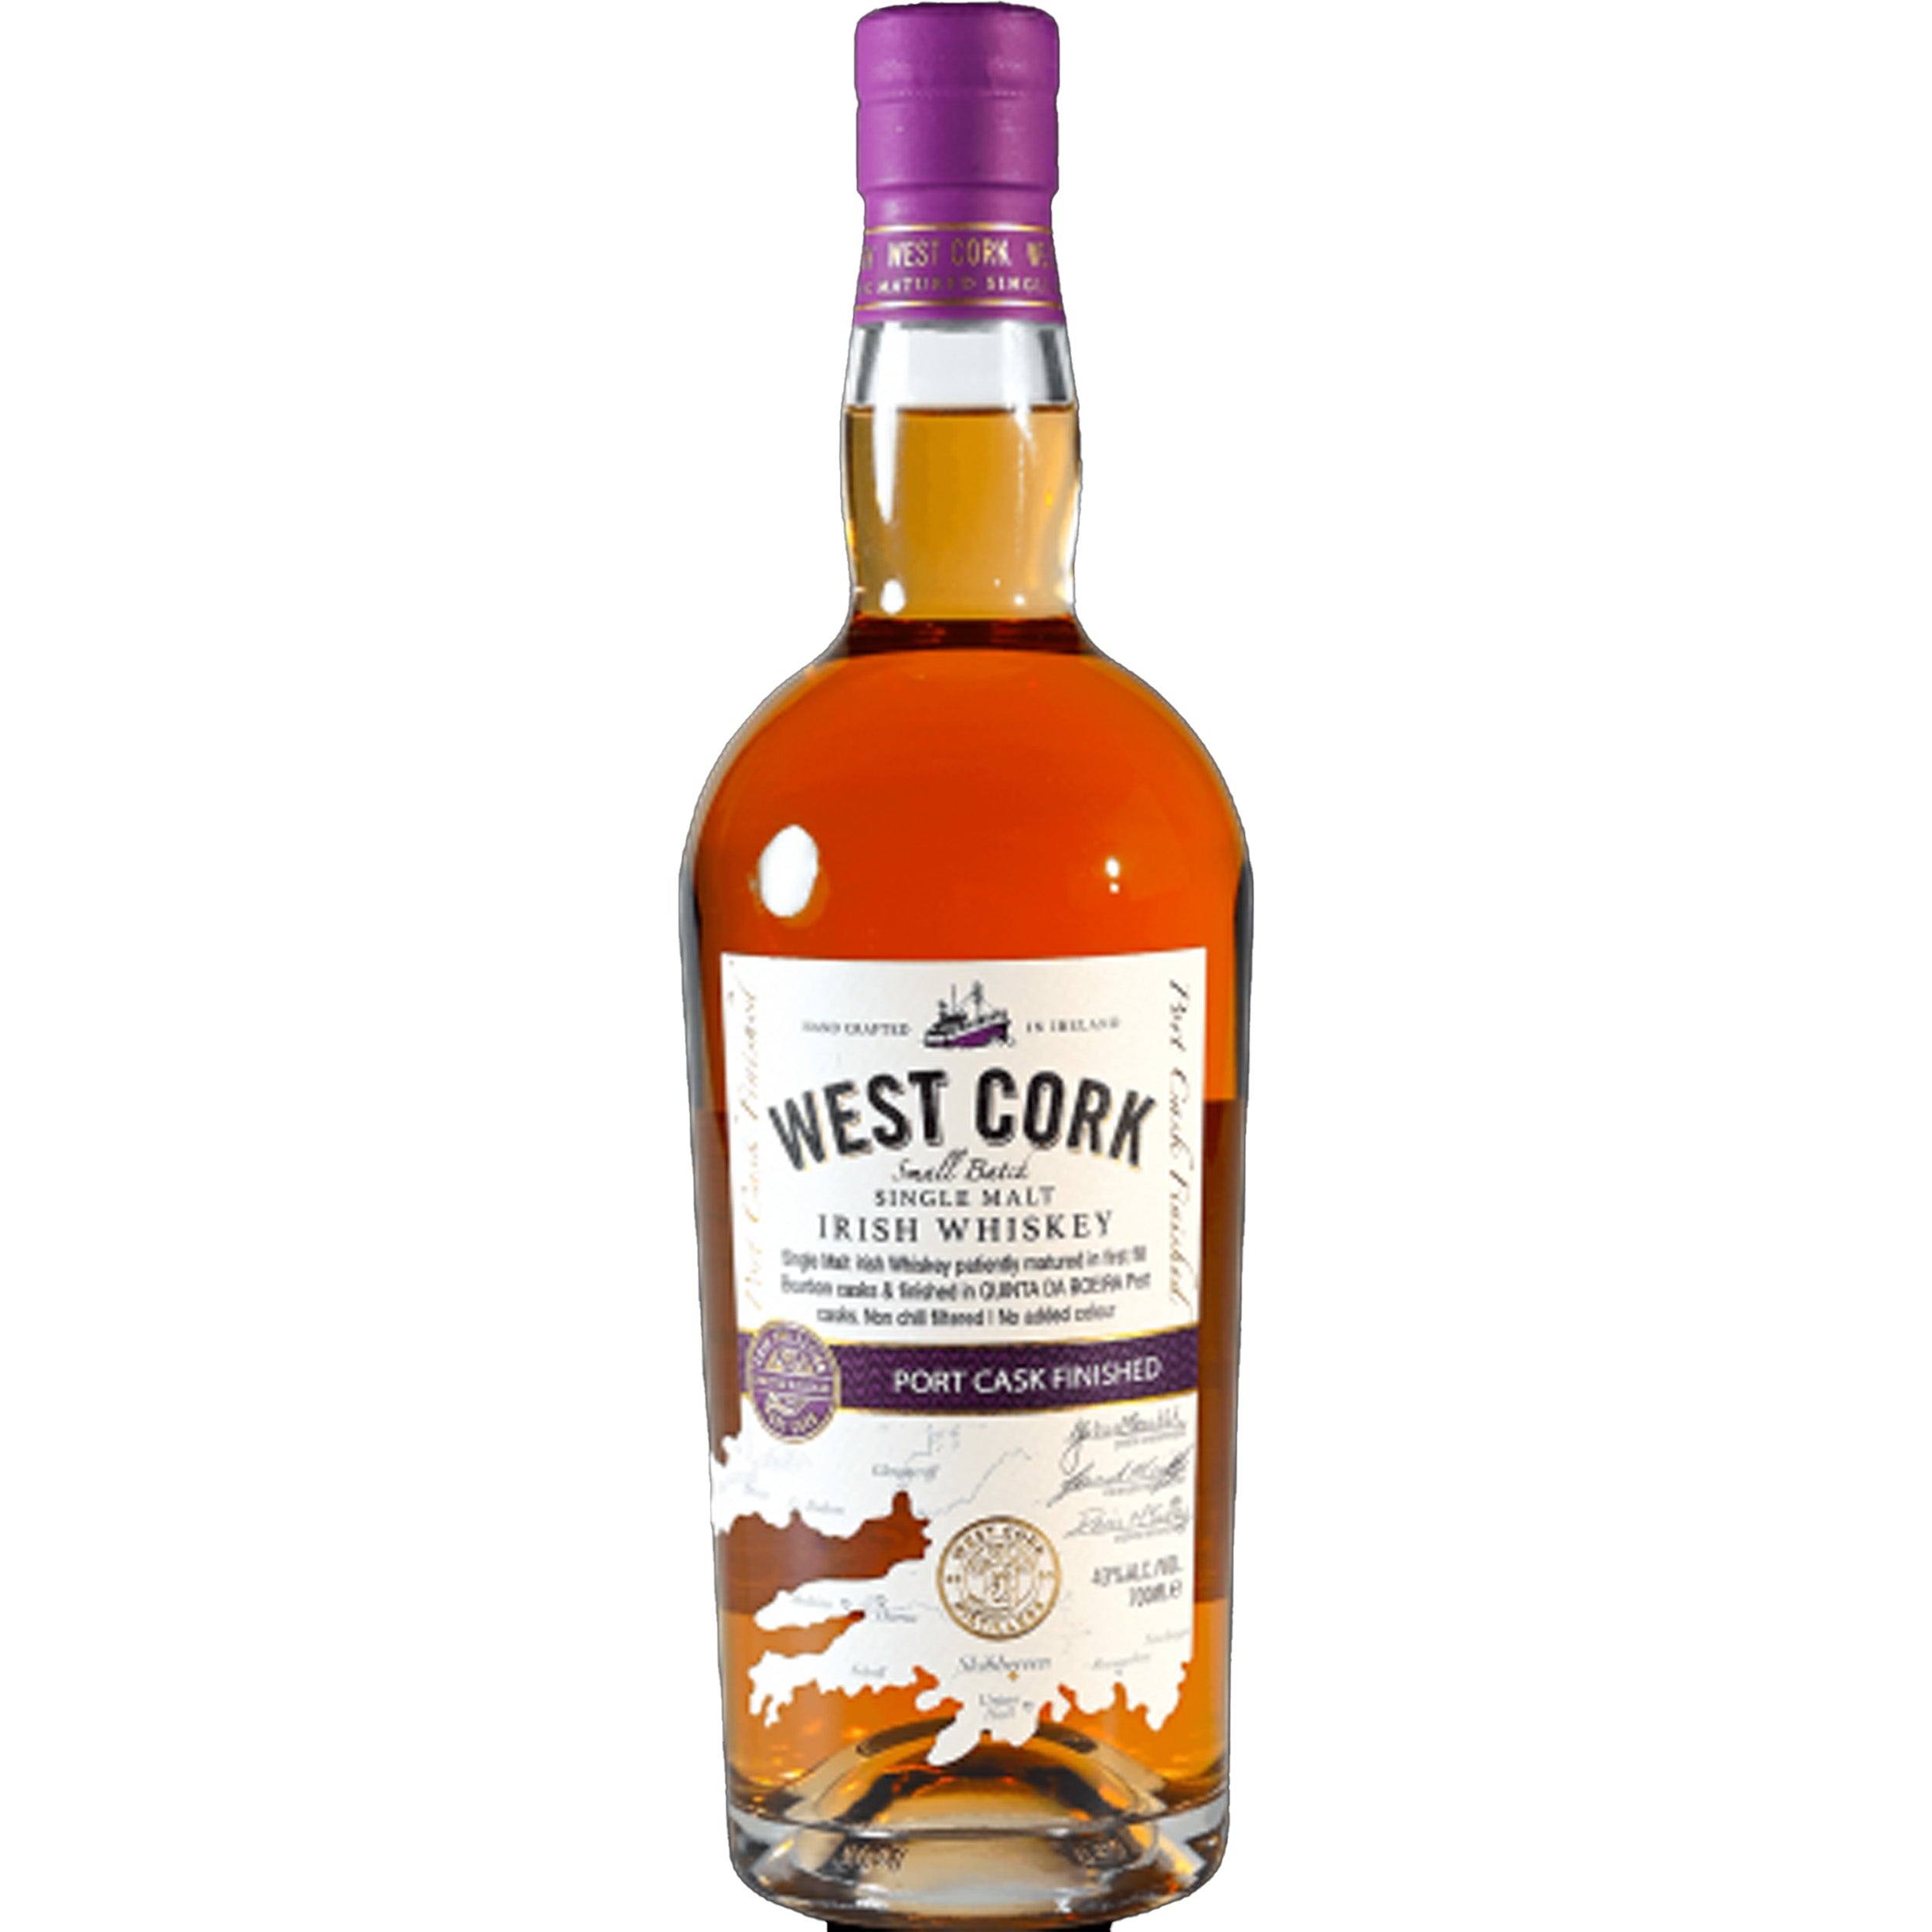 West Cork Port Cask 12 Year Old Irish Whiskey